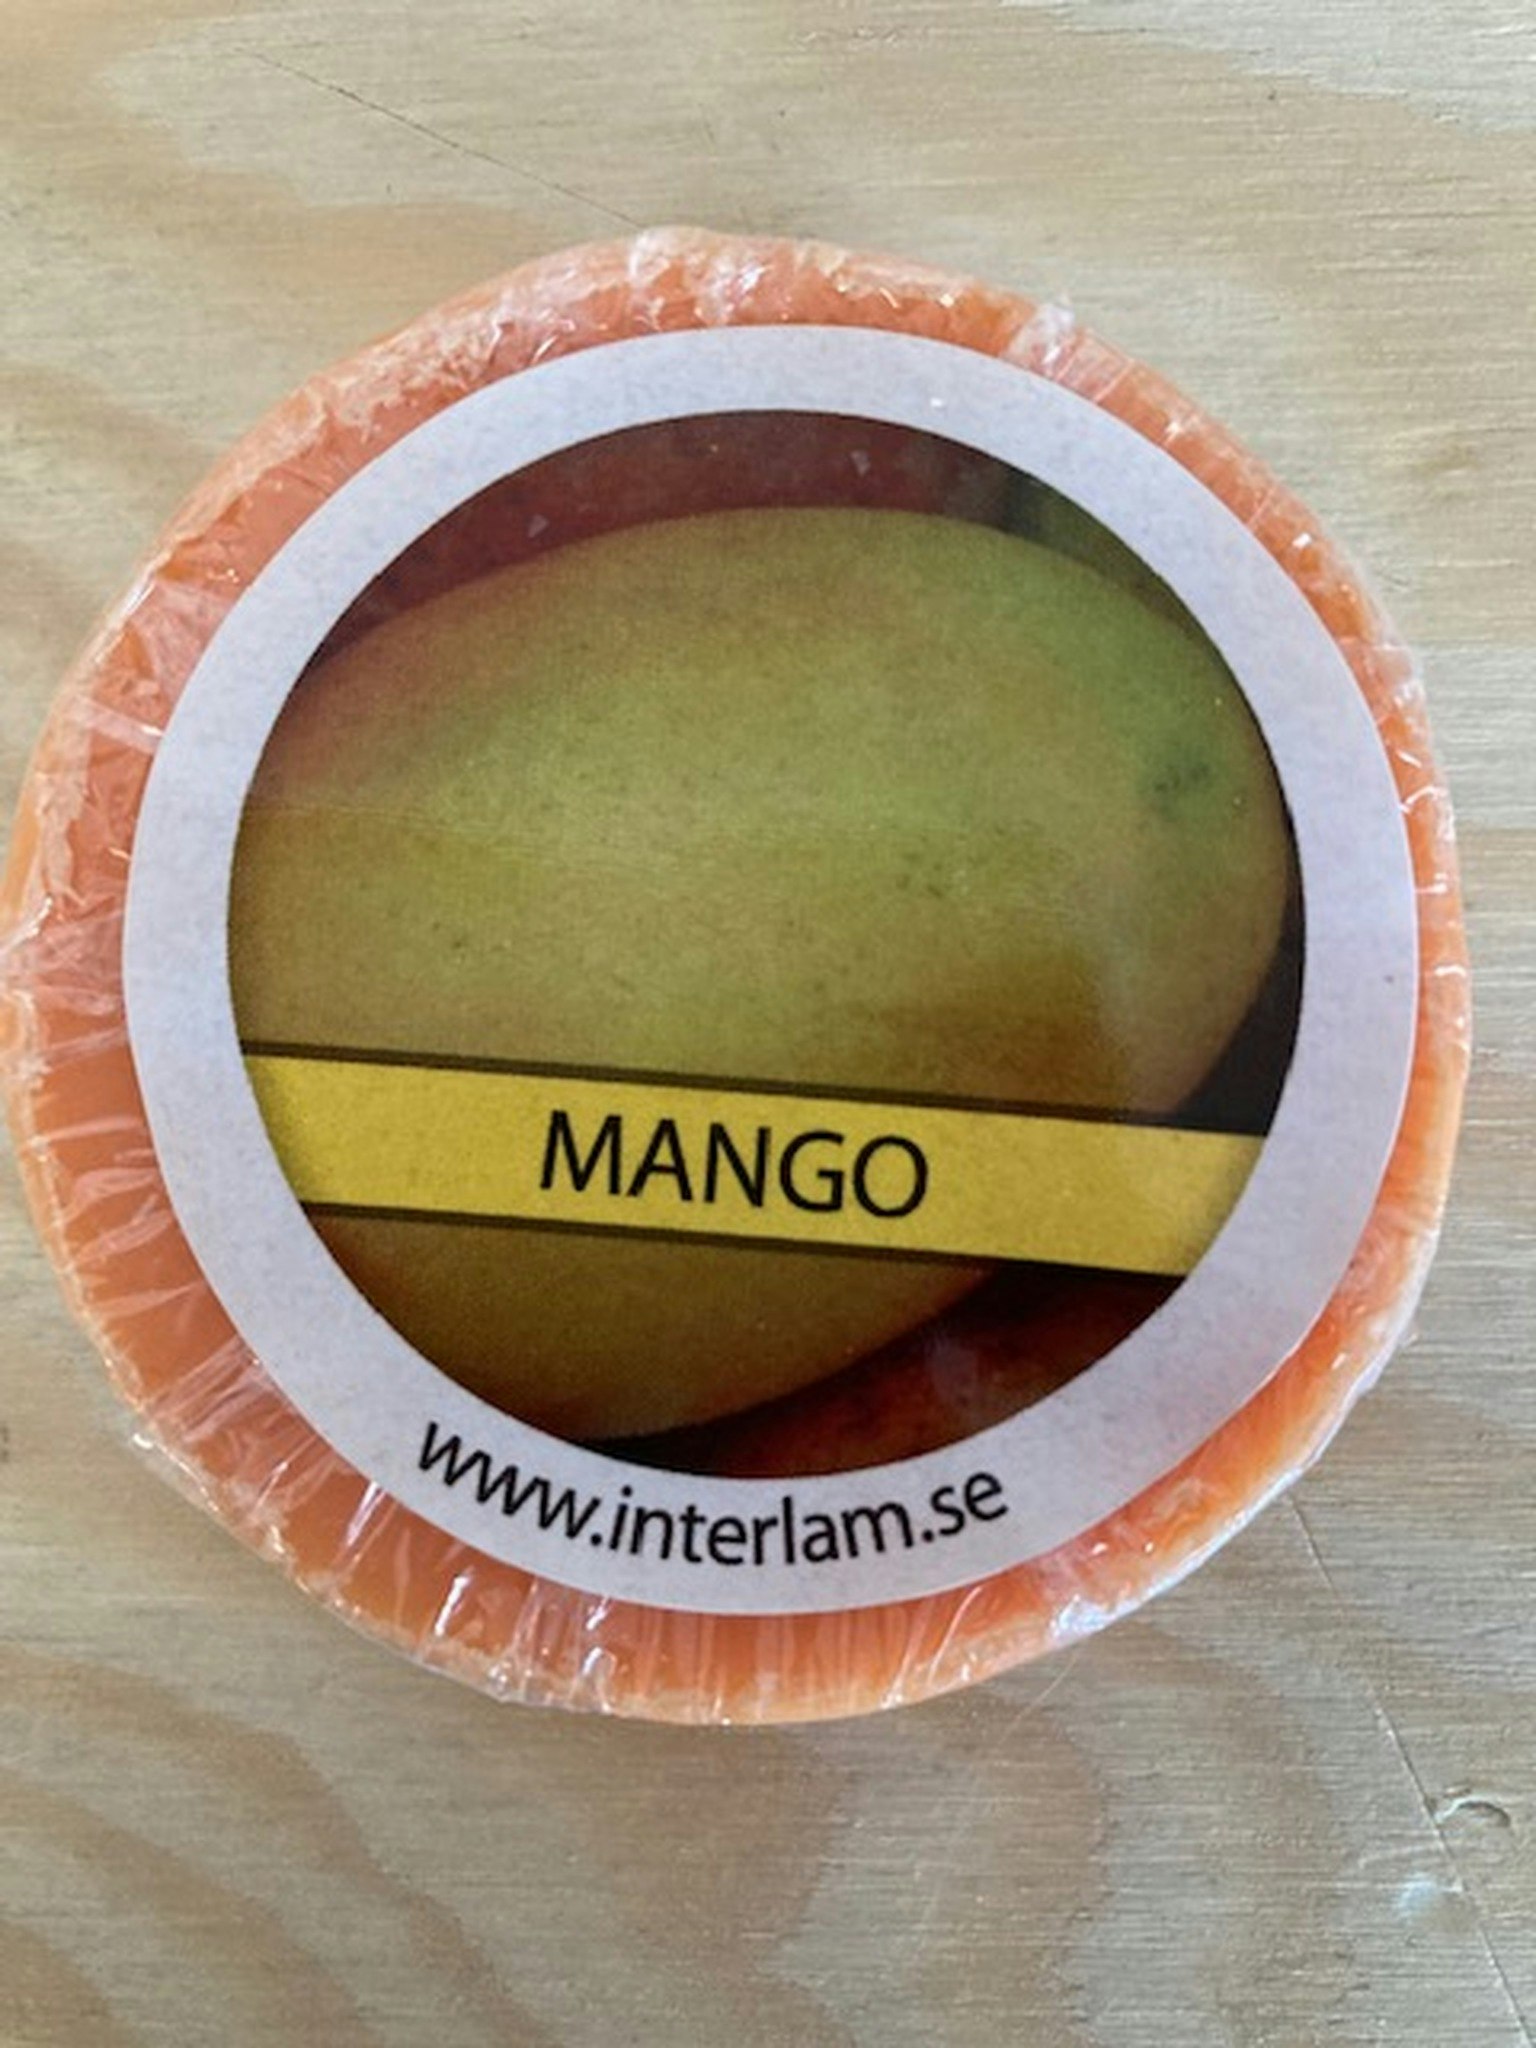 Mango, Interlam, Vaxkaka